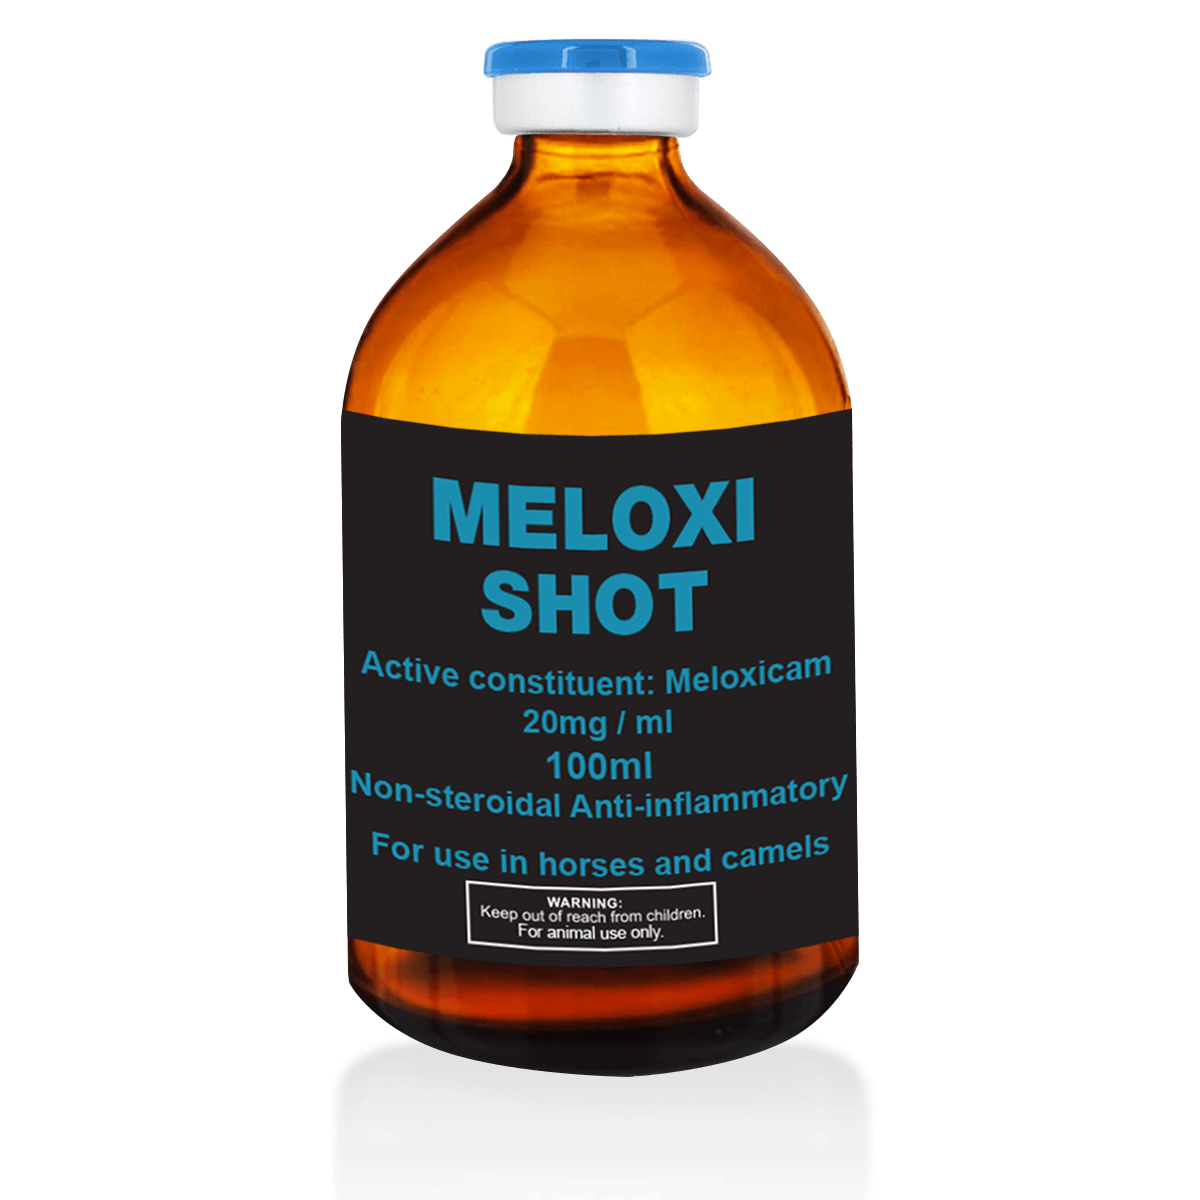 Buy Meloxi Shot 100ml Online - Meloxicam 20mg/ml